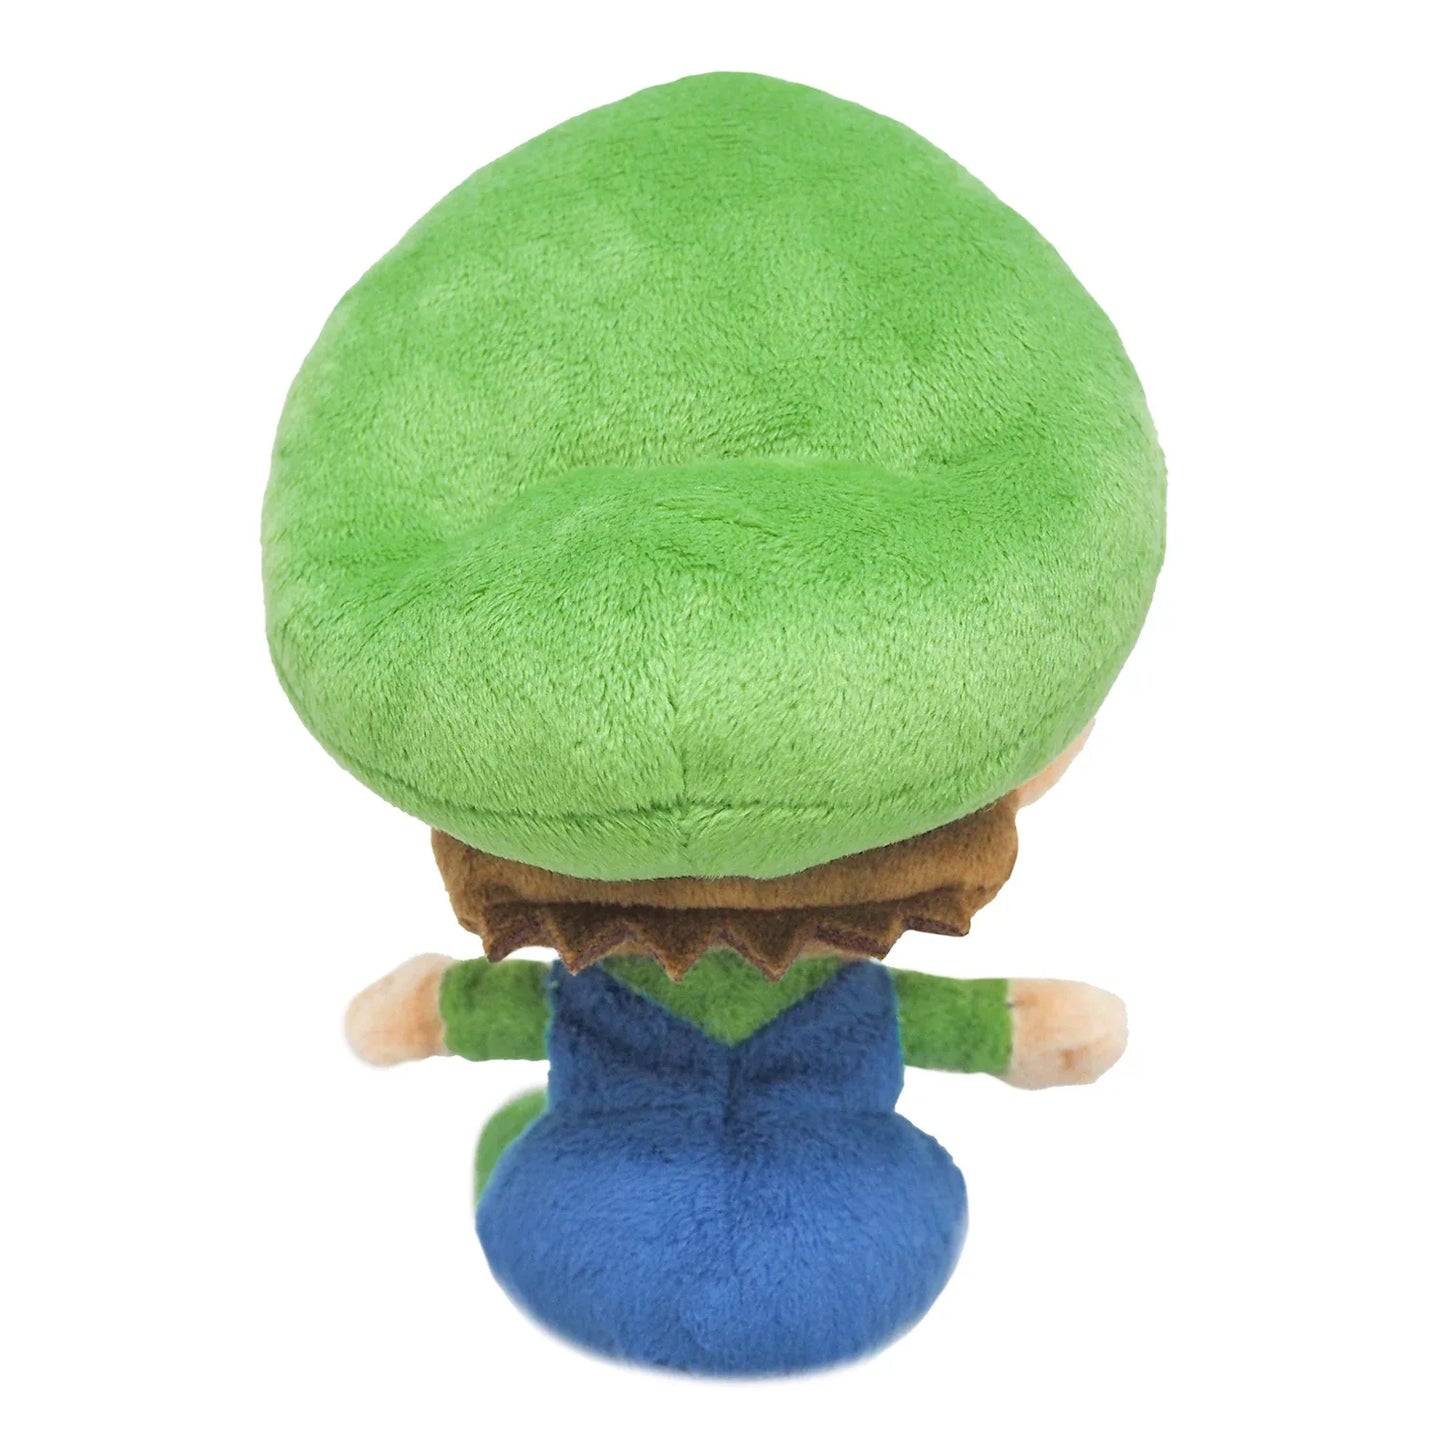 Super Mario Plush - Baby Luigi - PRE-ORDER*